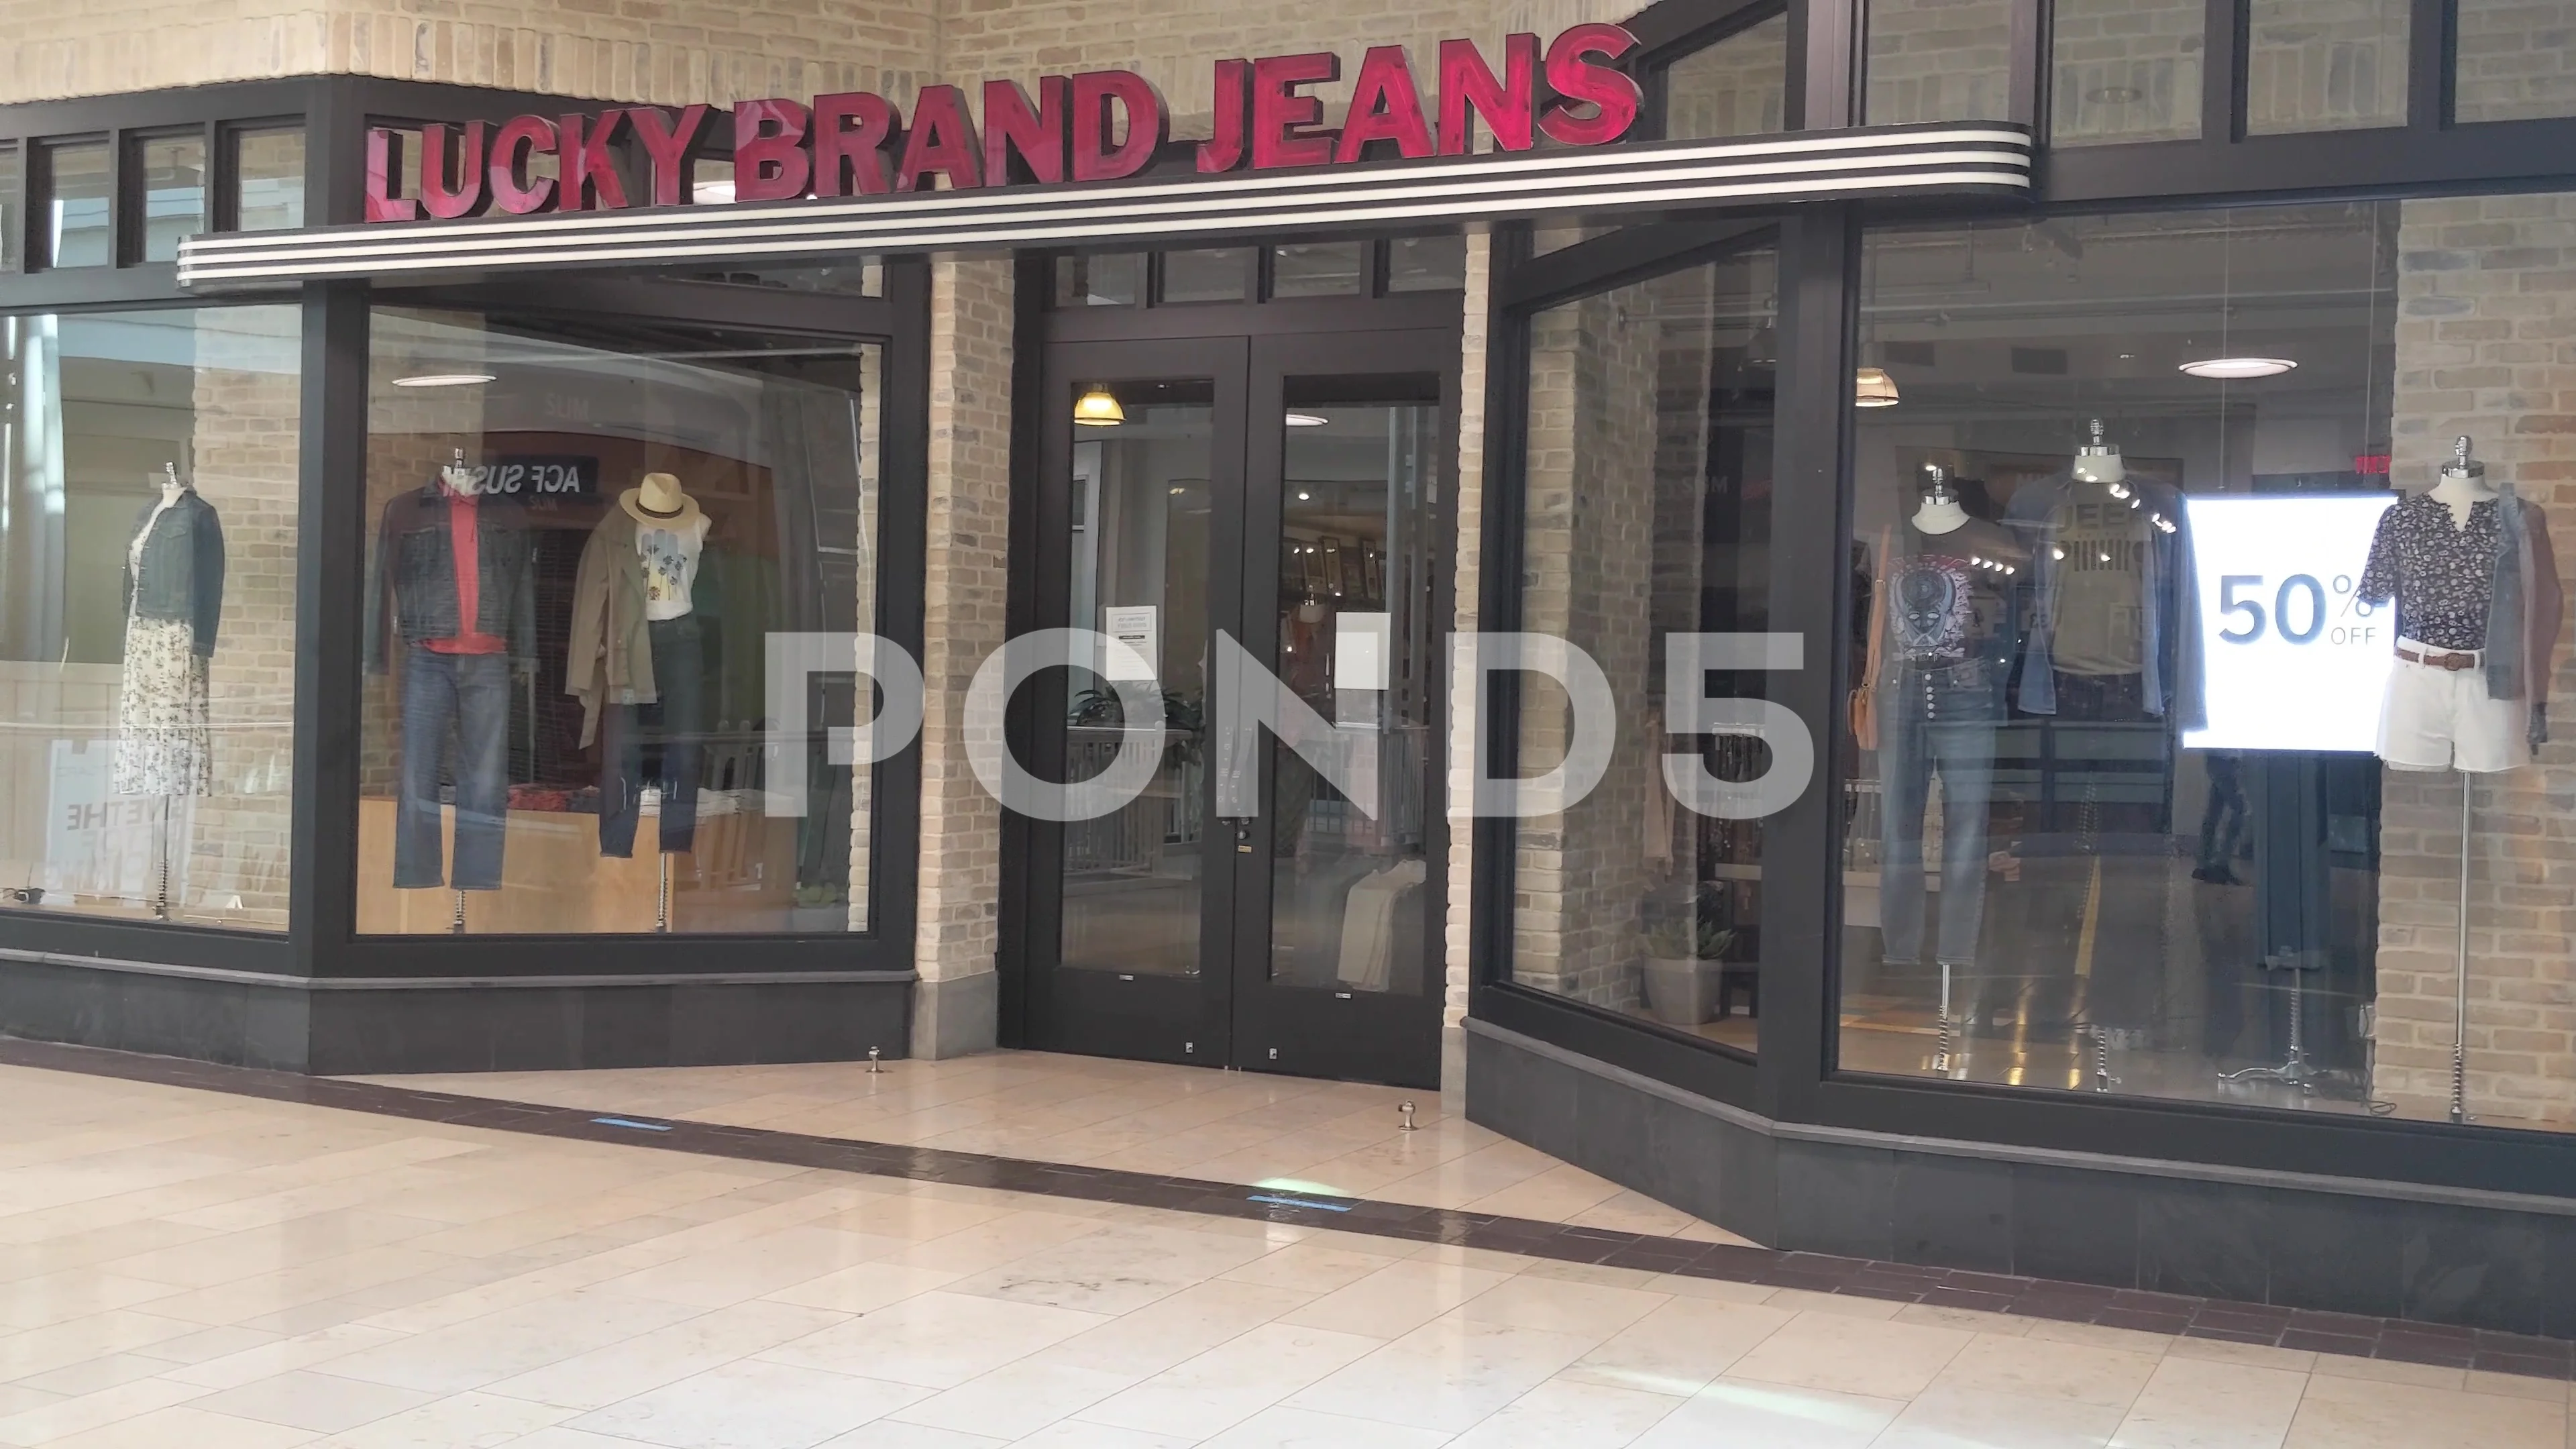 https://images.pond5.com/lucky-brand-jeans-shopping-mall-140767569_prevstill.jpeg